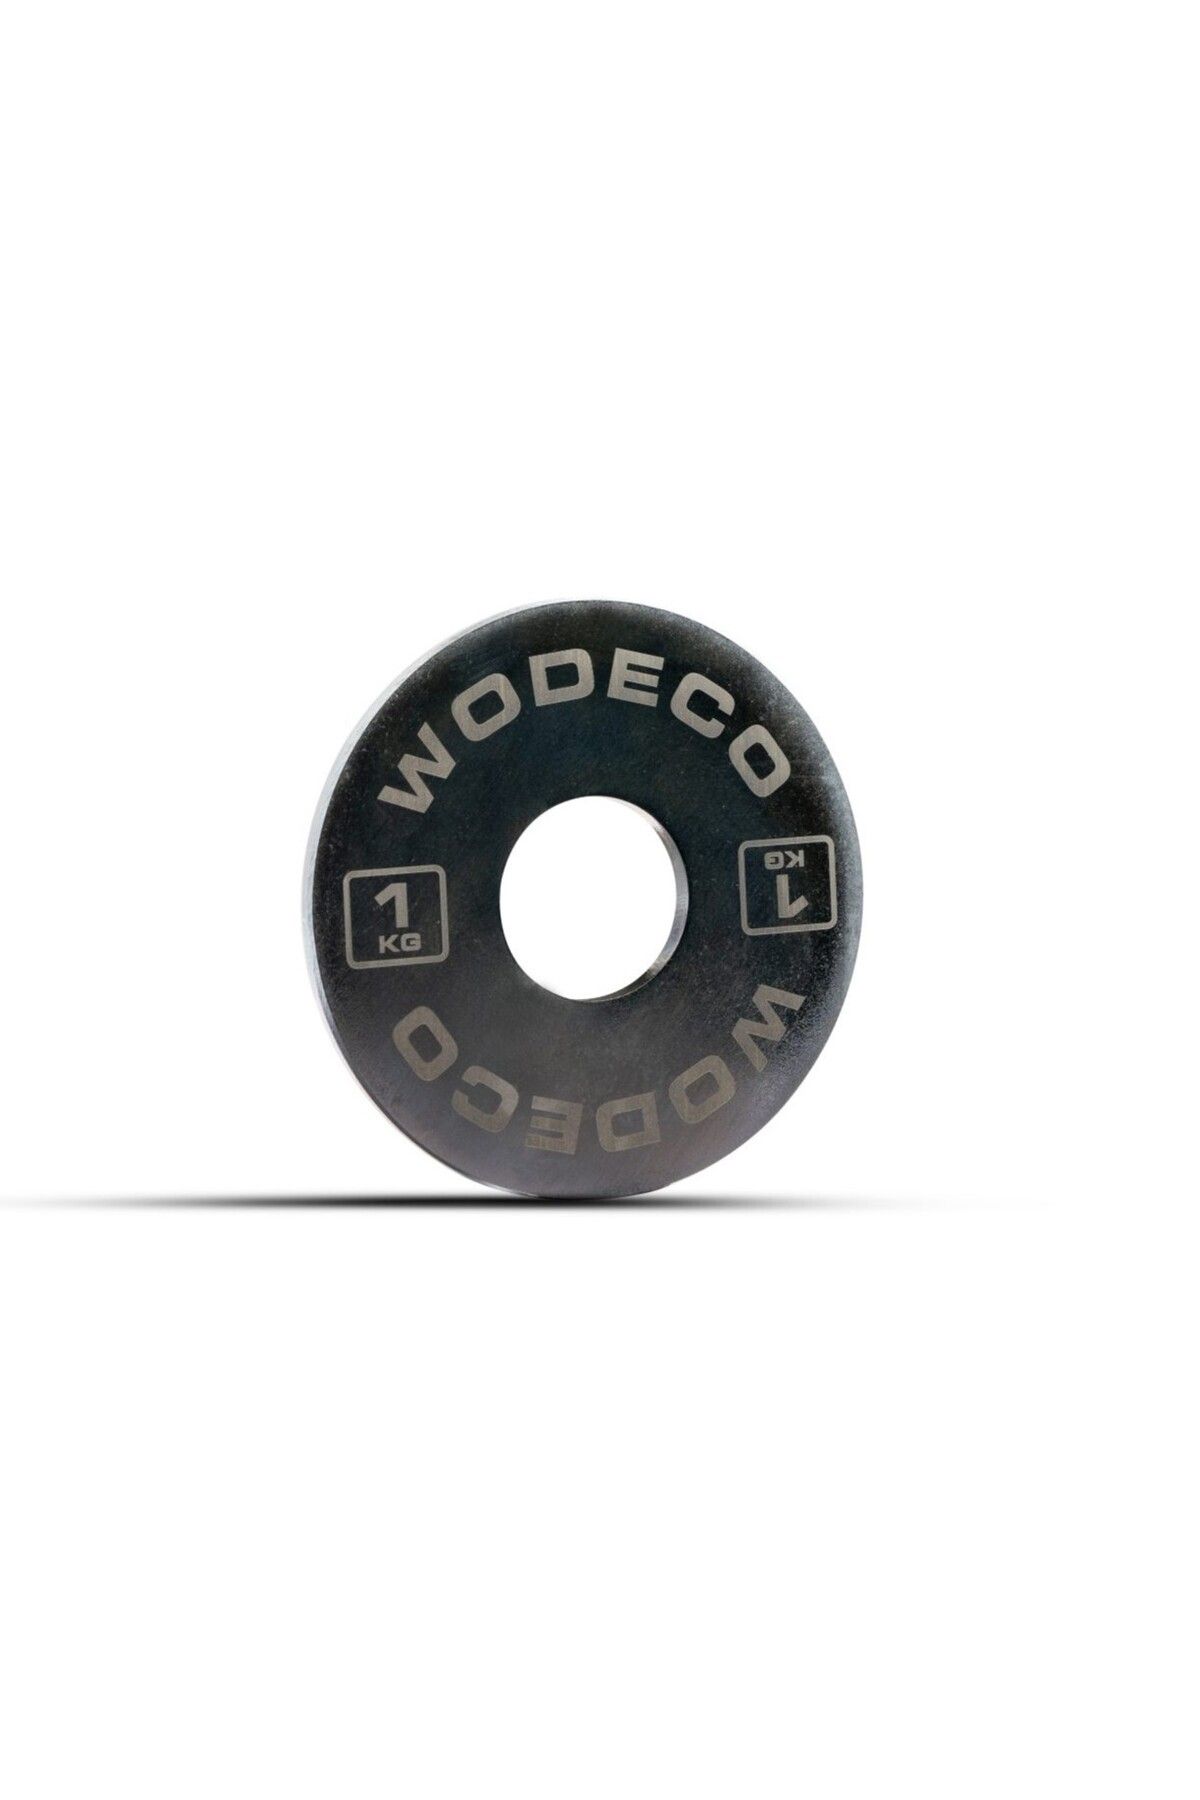 Wodeco 1 Kg Metal Ara Plaka - Metal Ağırlık Plakası - 2 Adet